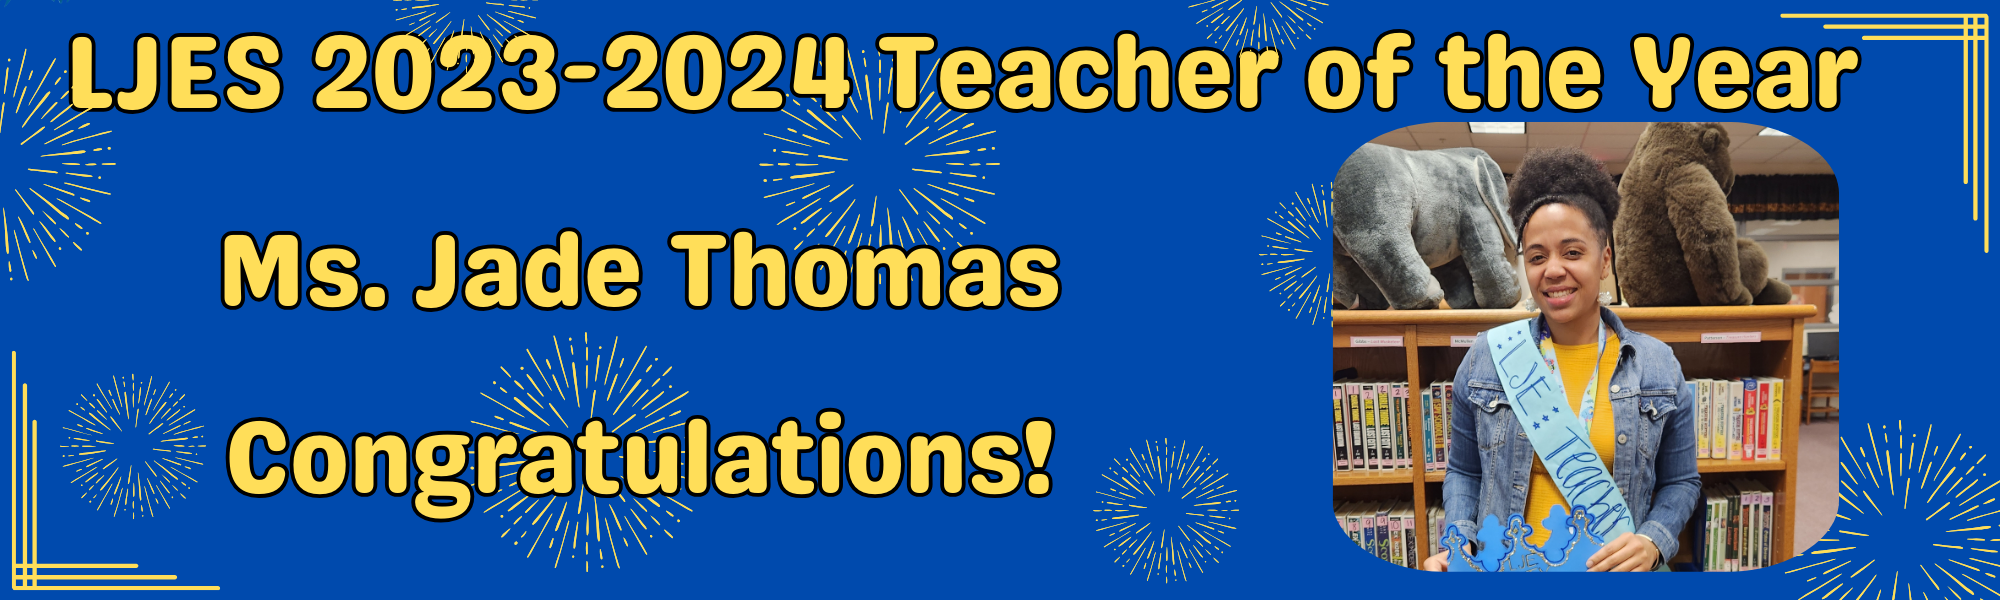 2023-2024 Teacher of the Year Jade Thomas